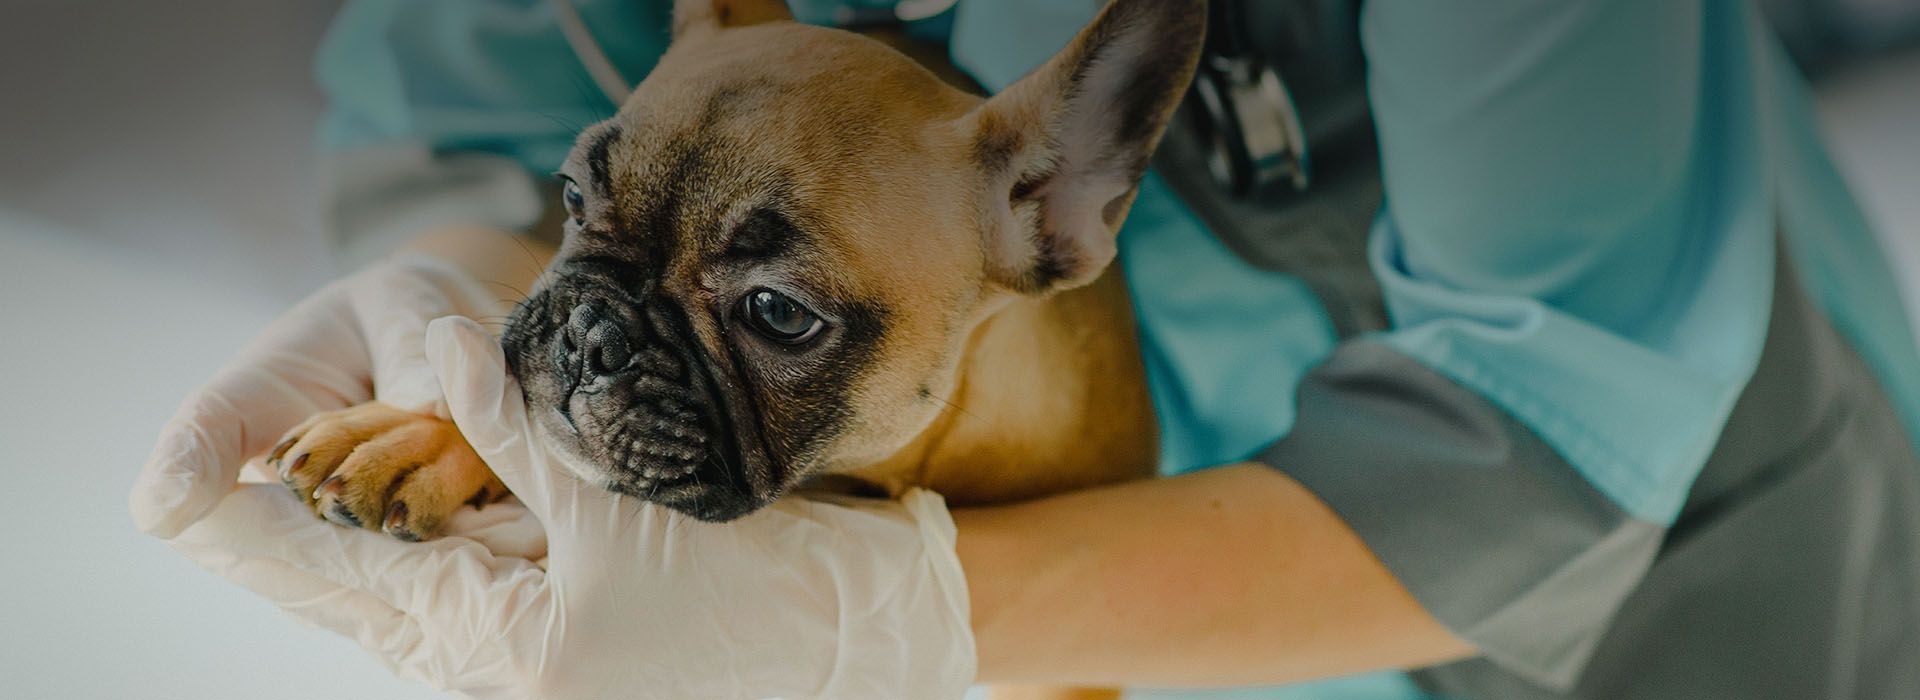  french bulldog dog at vet clinic